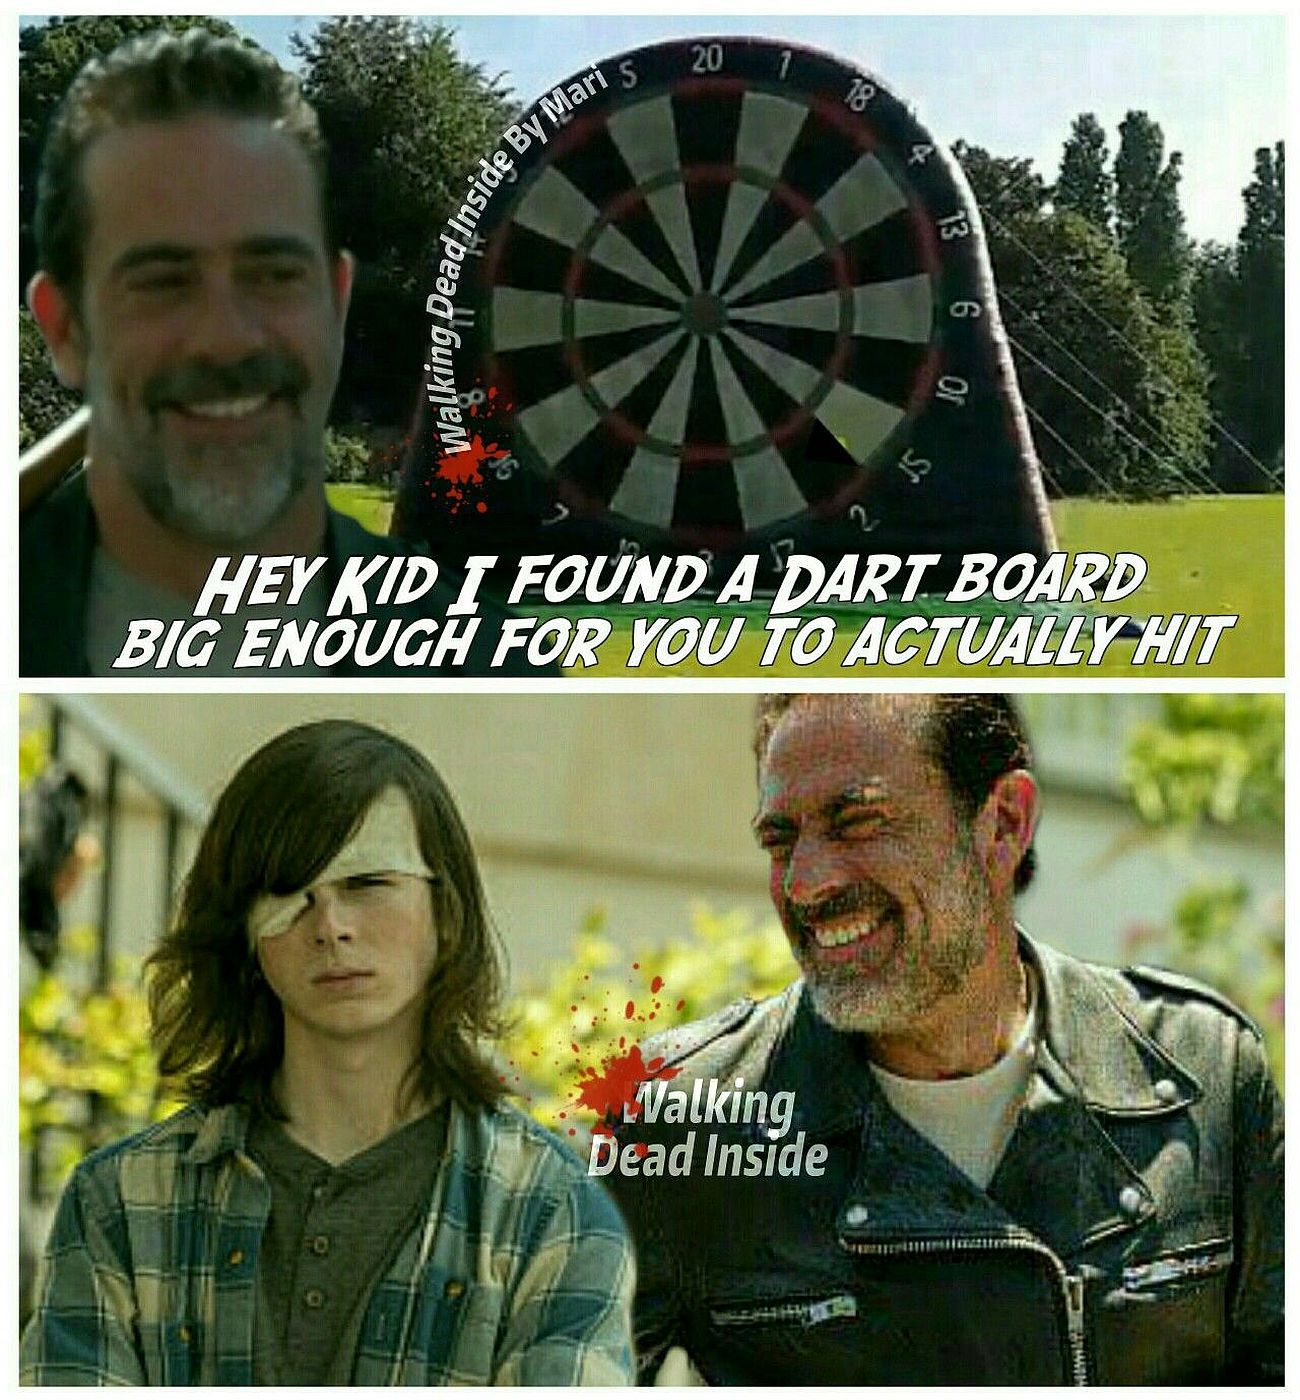 Rick's dart board isn't funny for Carl.